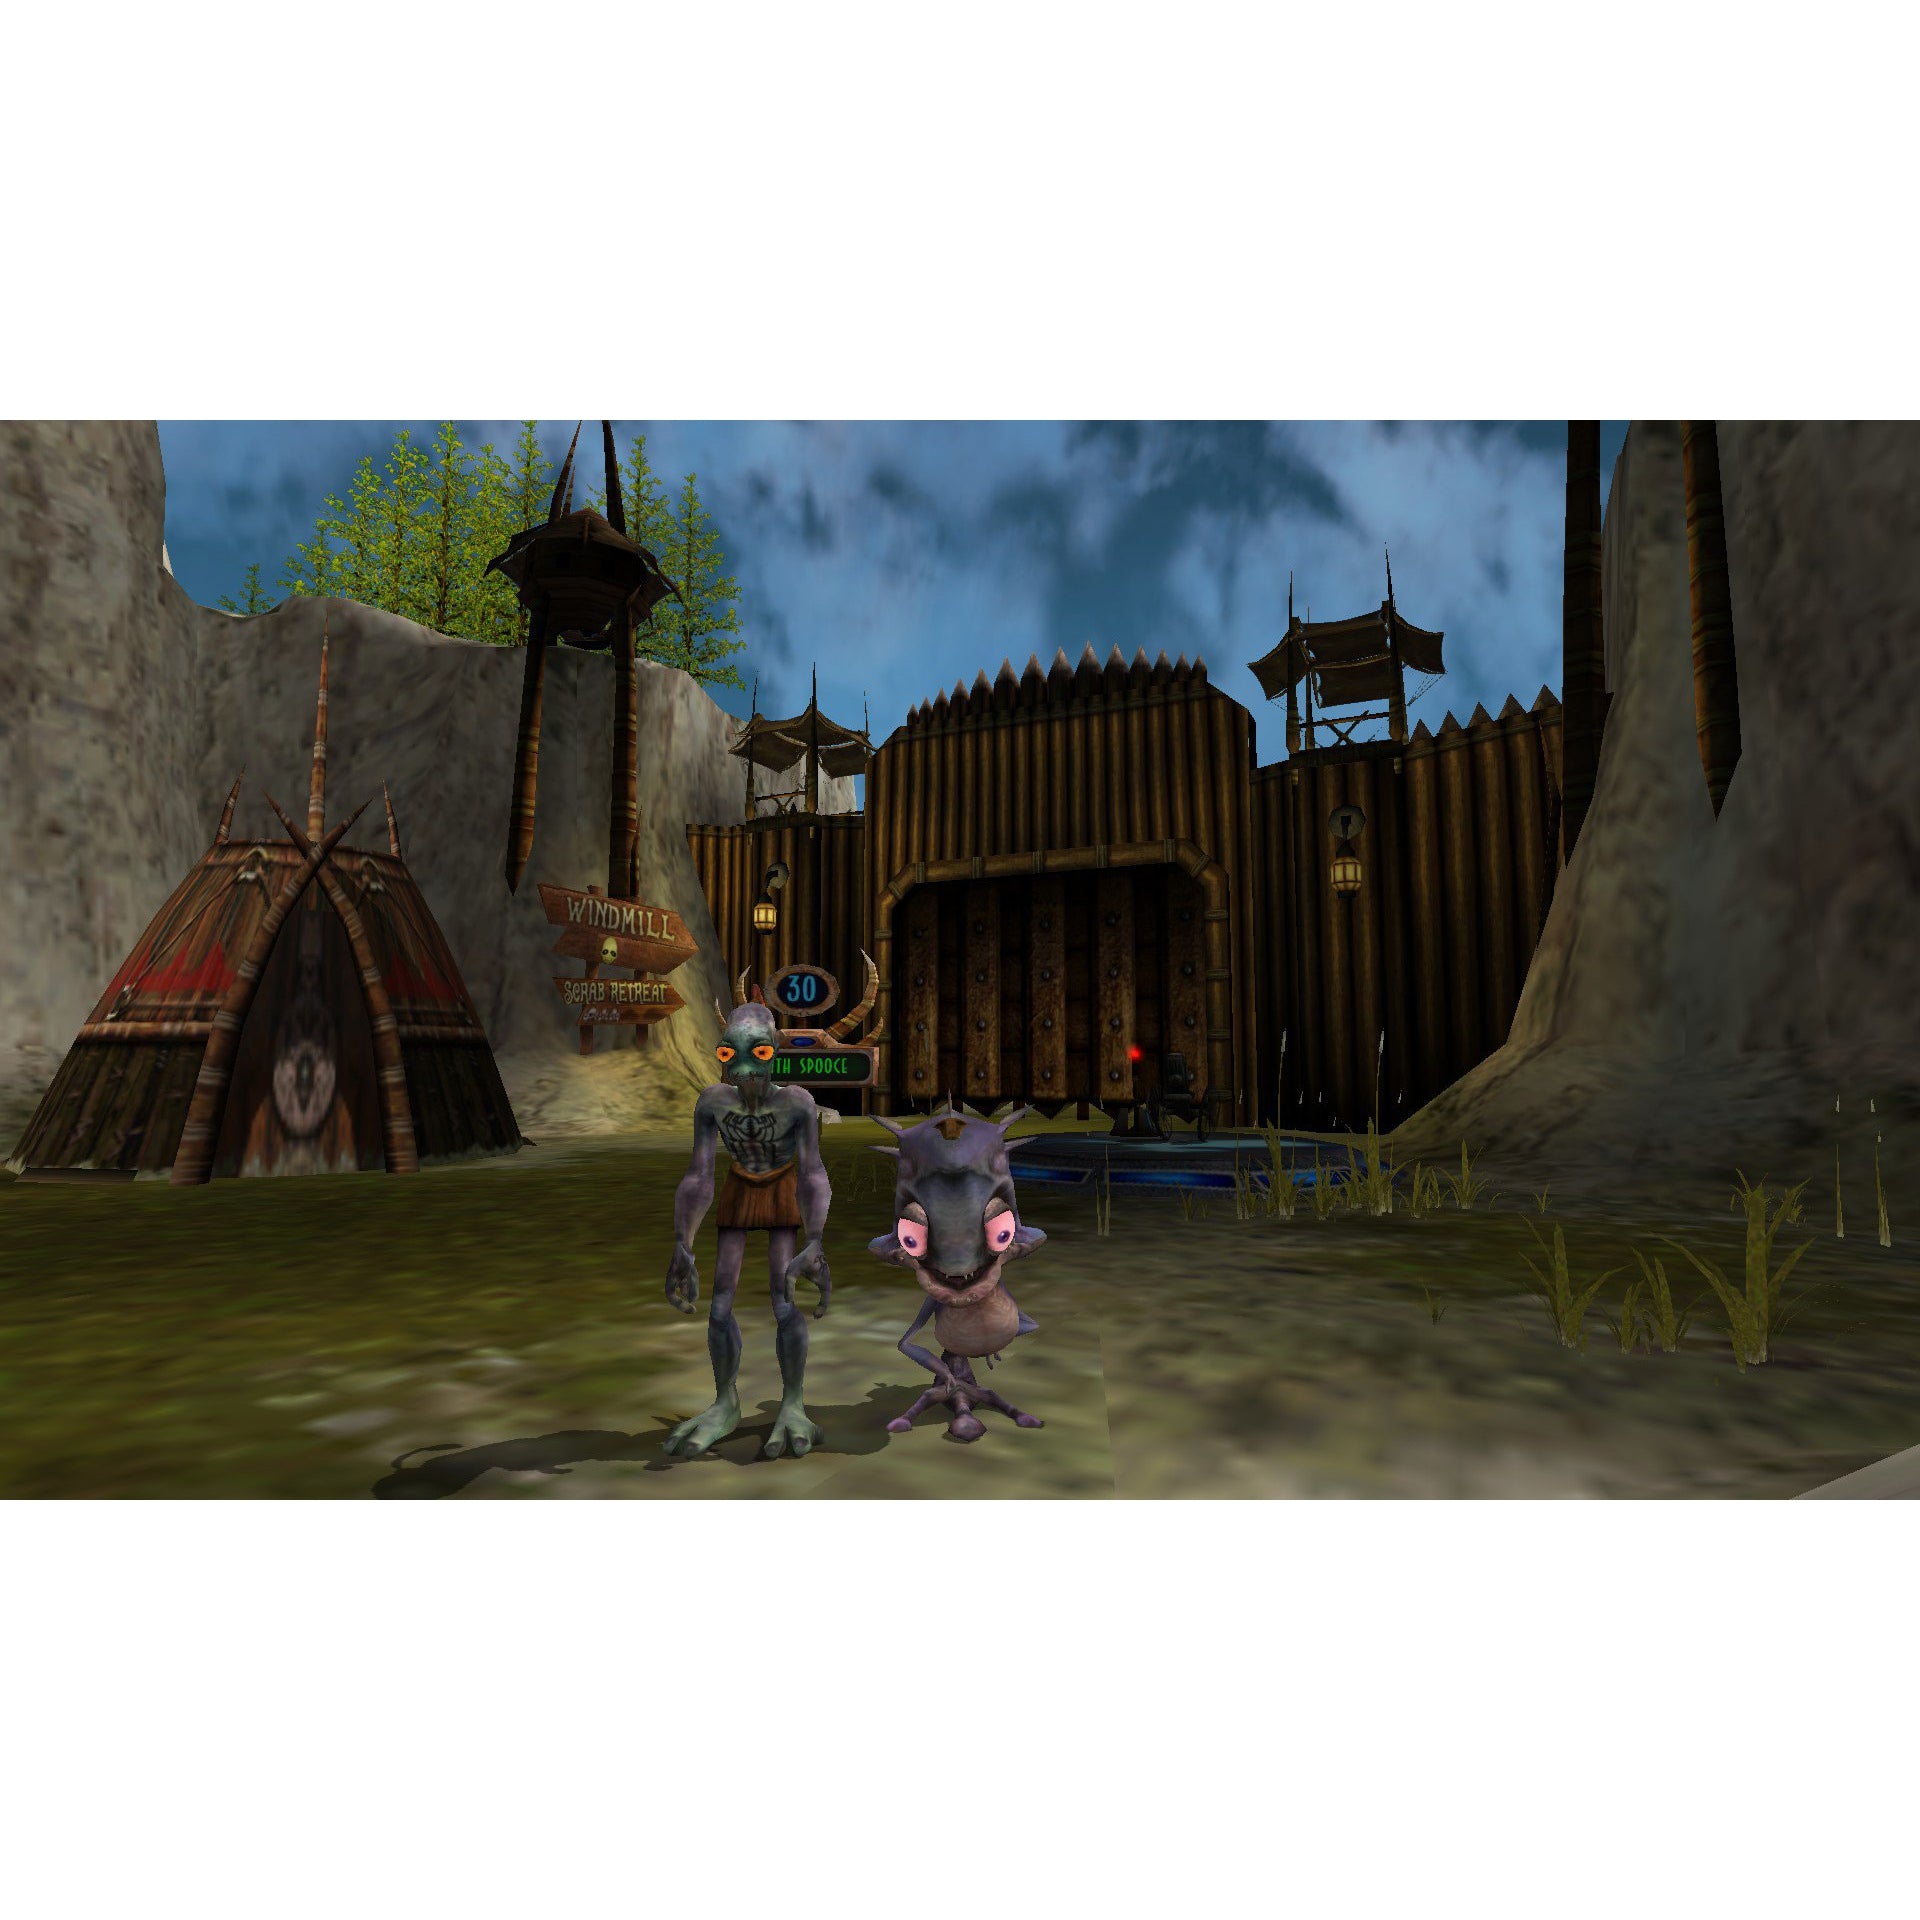 Oddworld: Munch's Oddysee - Microsoft Xbox Game